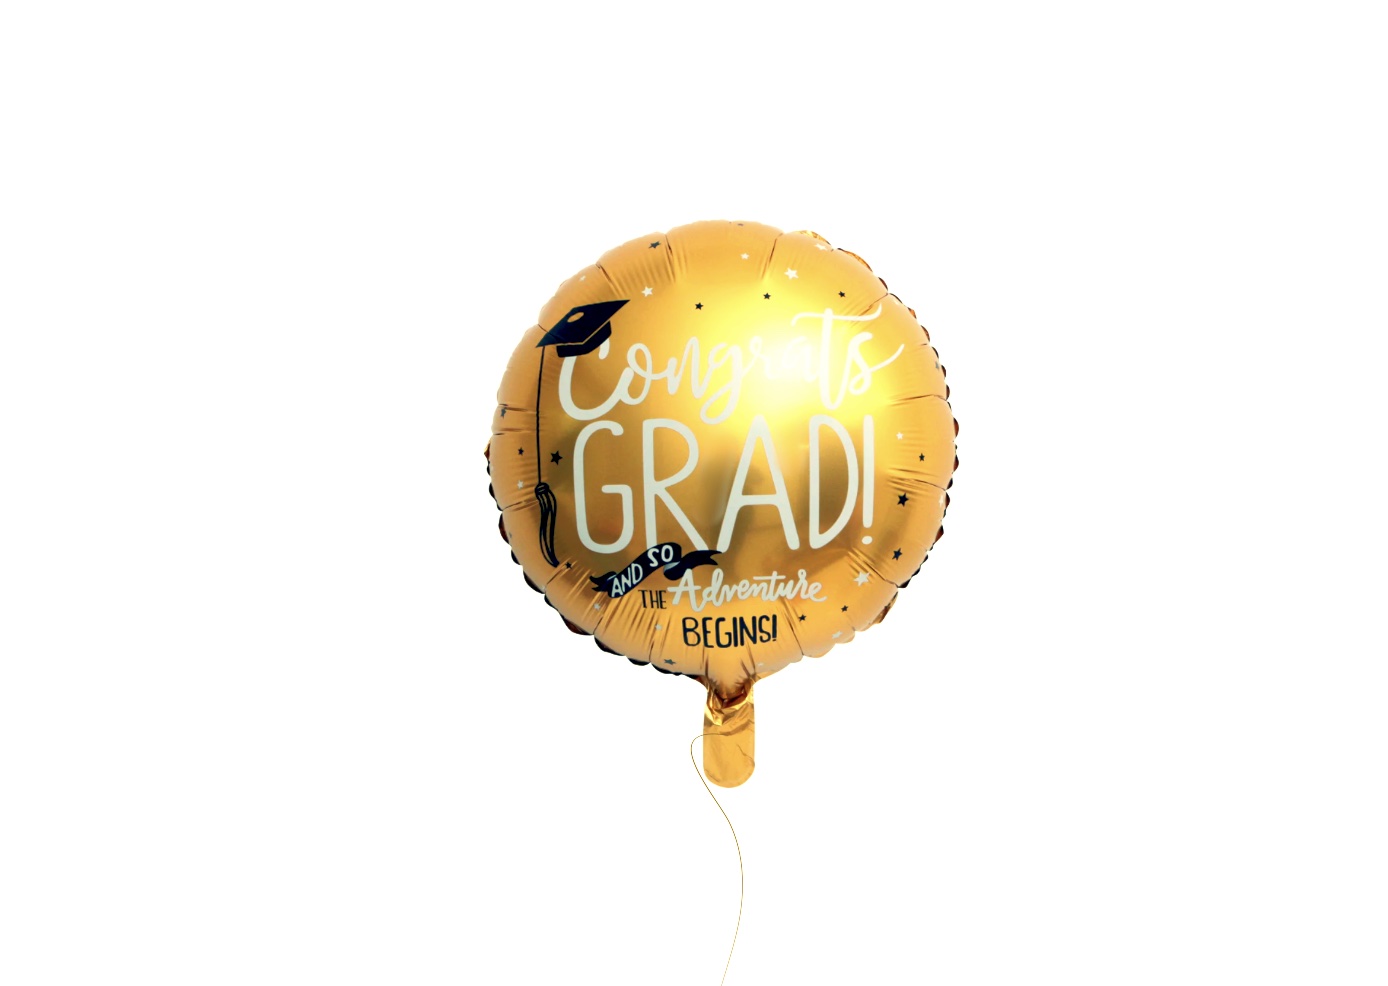 Balon okrągły Congrats GRAD! and adventure begins